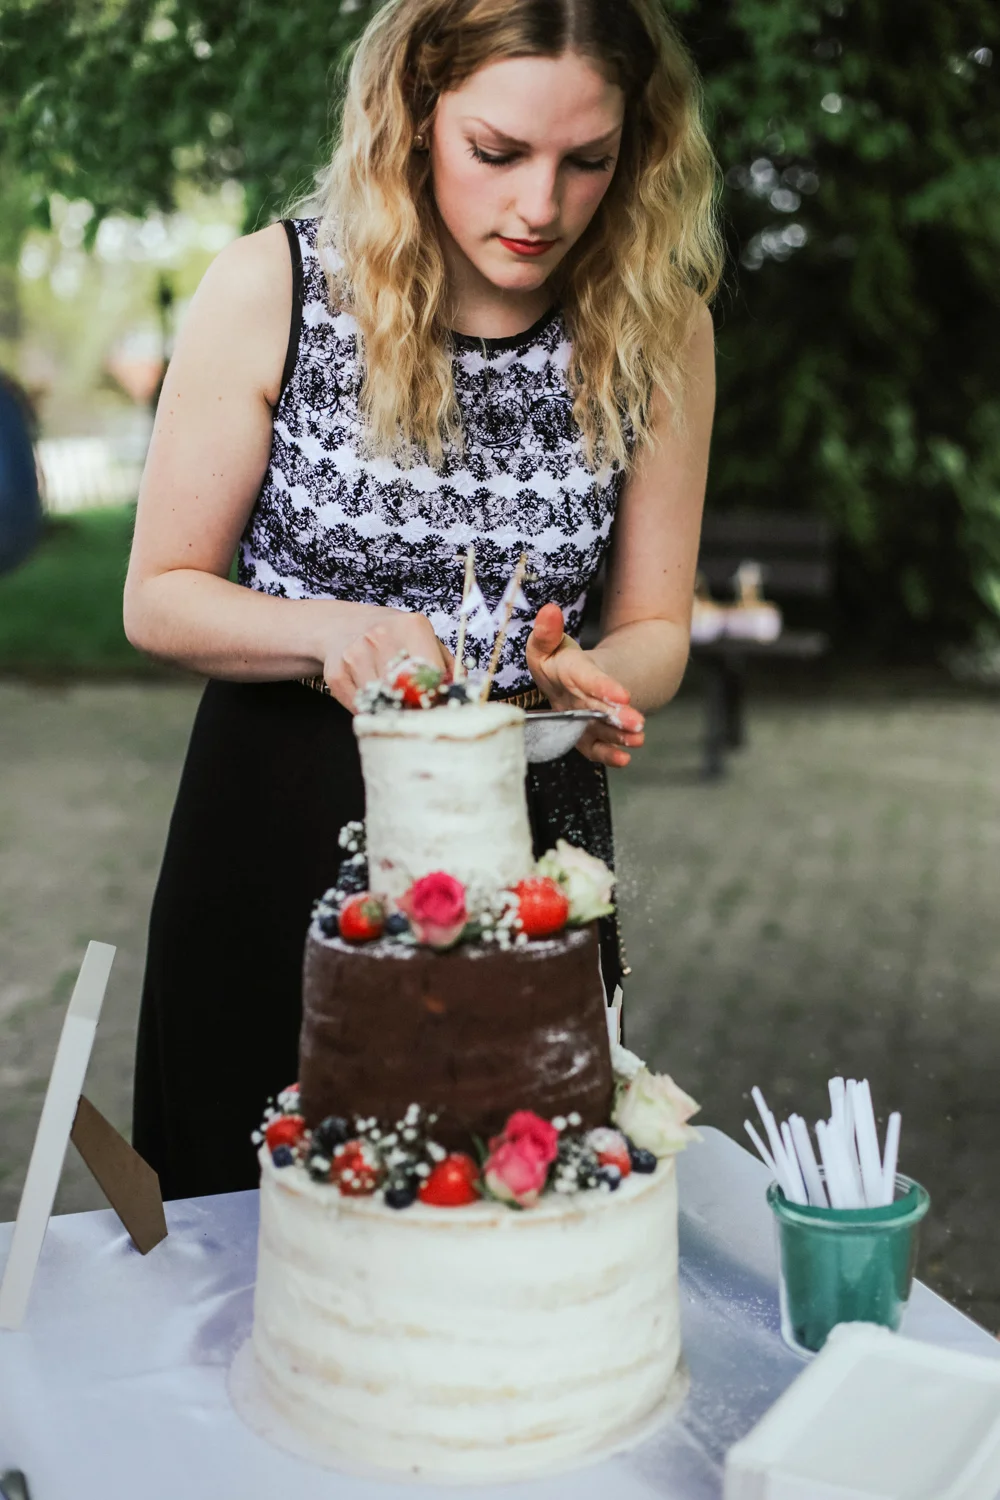 Rustic-Wedding-Cake-in-Vintge-Style-coucoucake